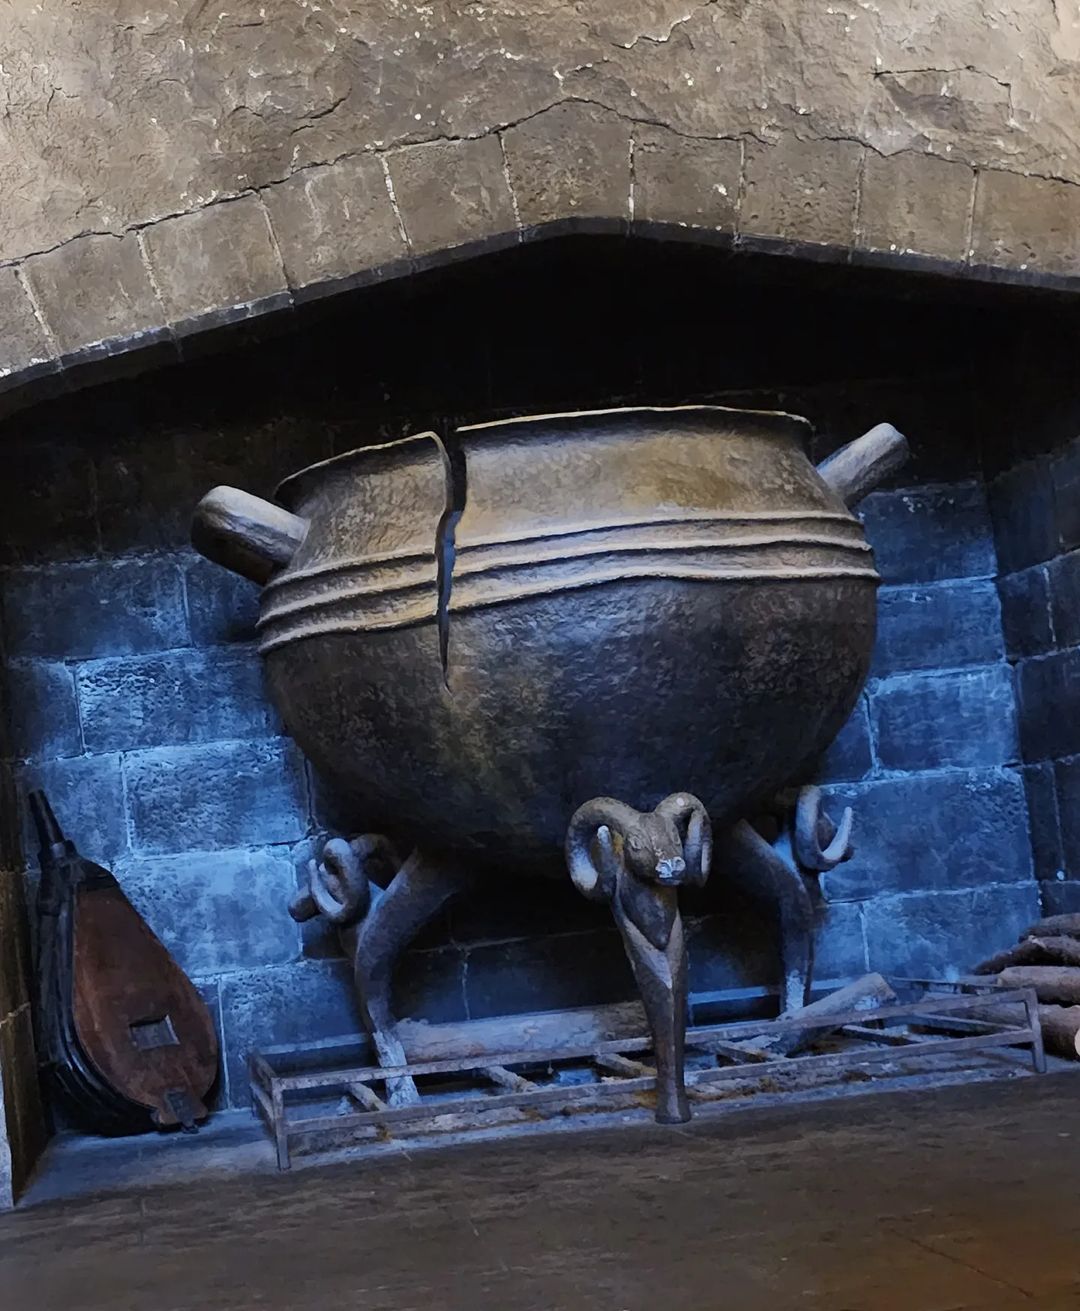 Decoración Caldero Chorreante - Restaurante Harry Potter en Universal Studios